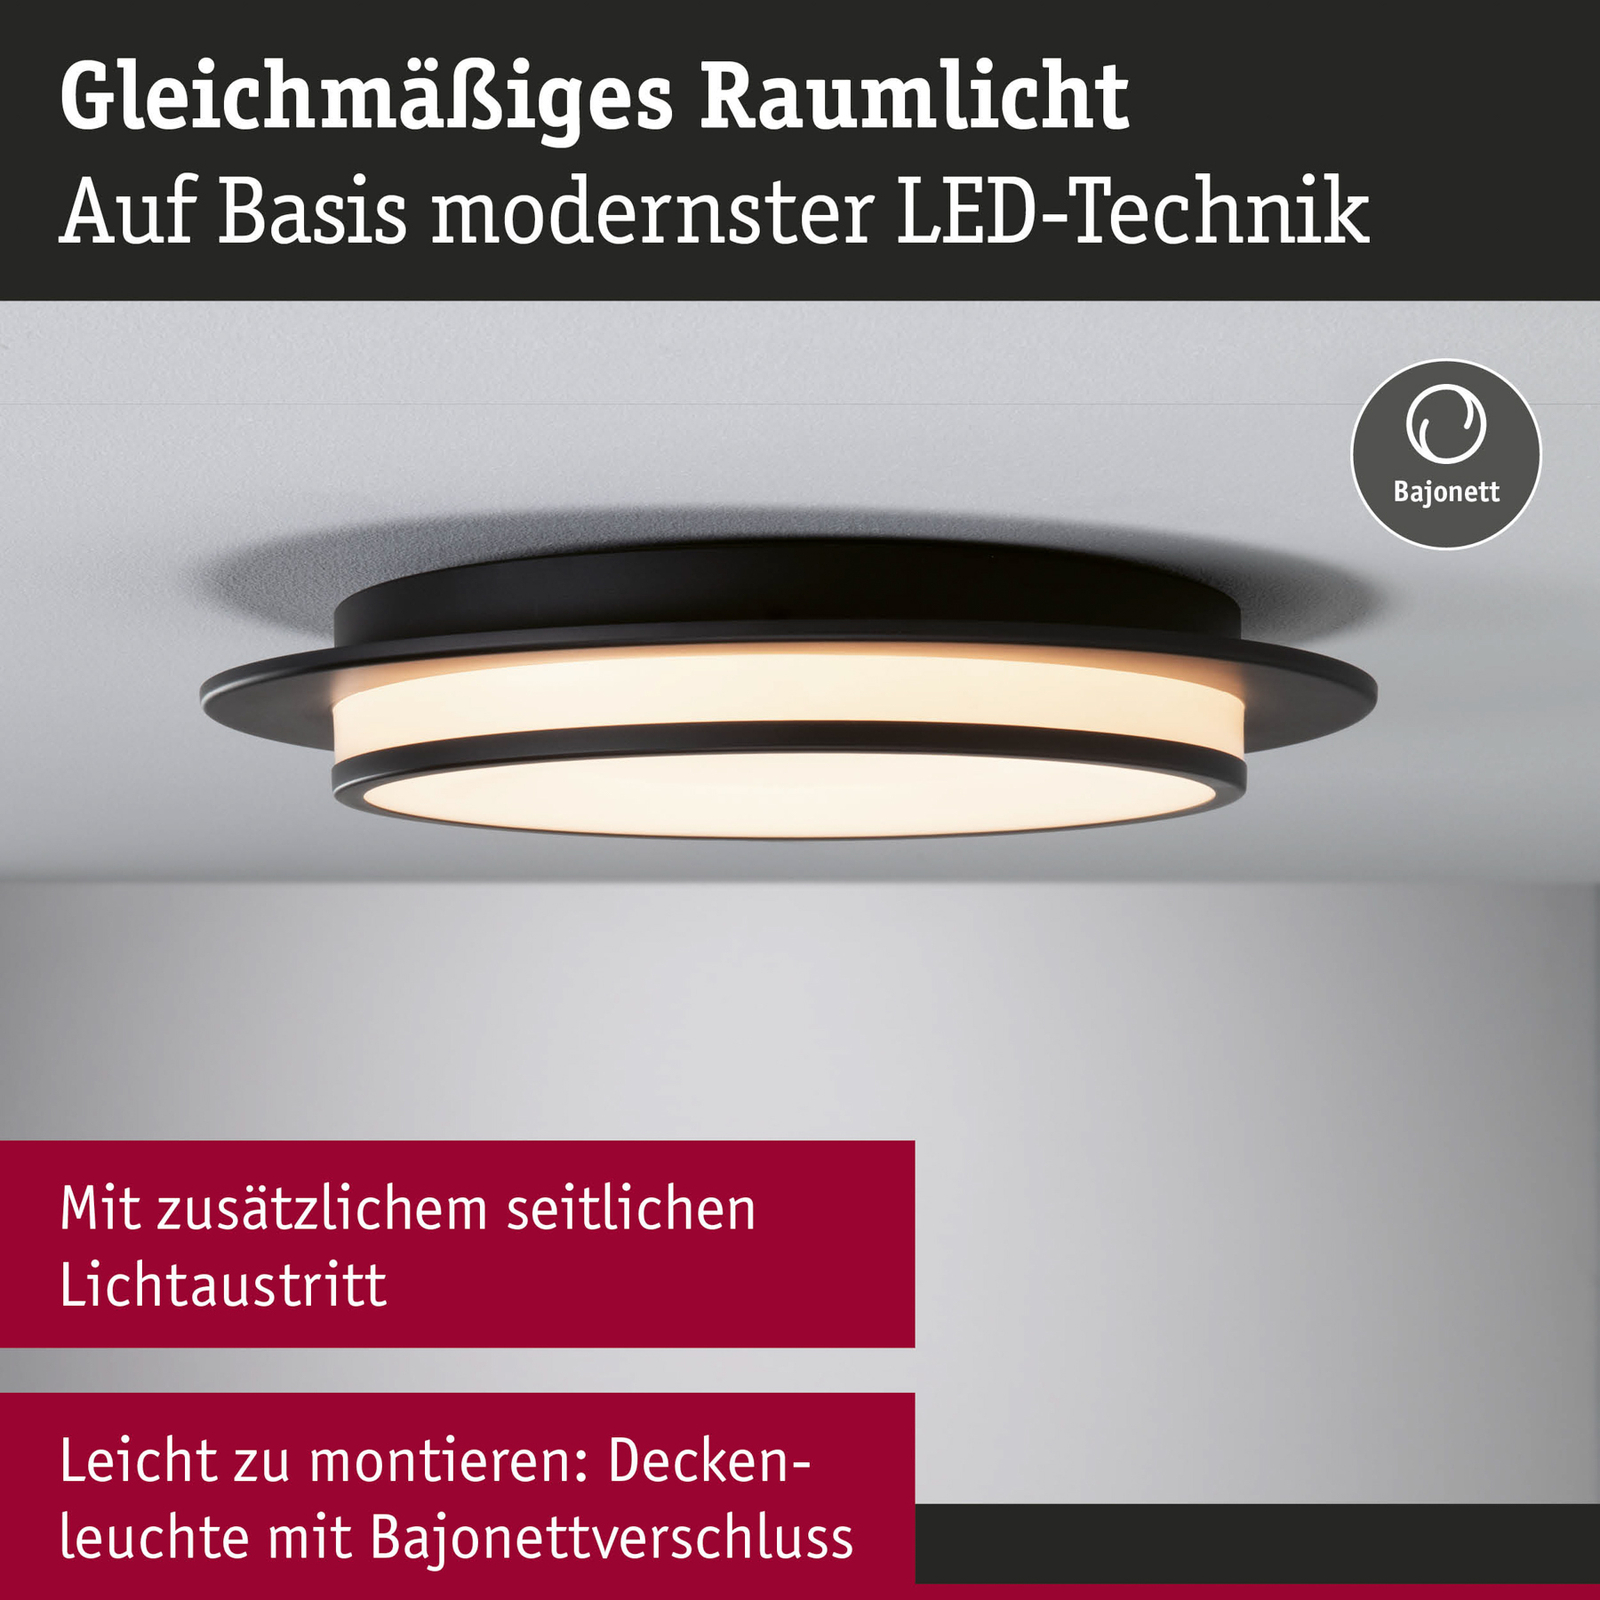 Paulmann Egron LED-Deckenlampe 3-step-dim, schwarz